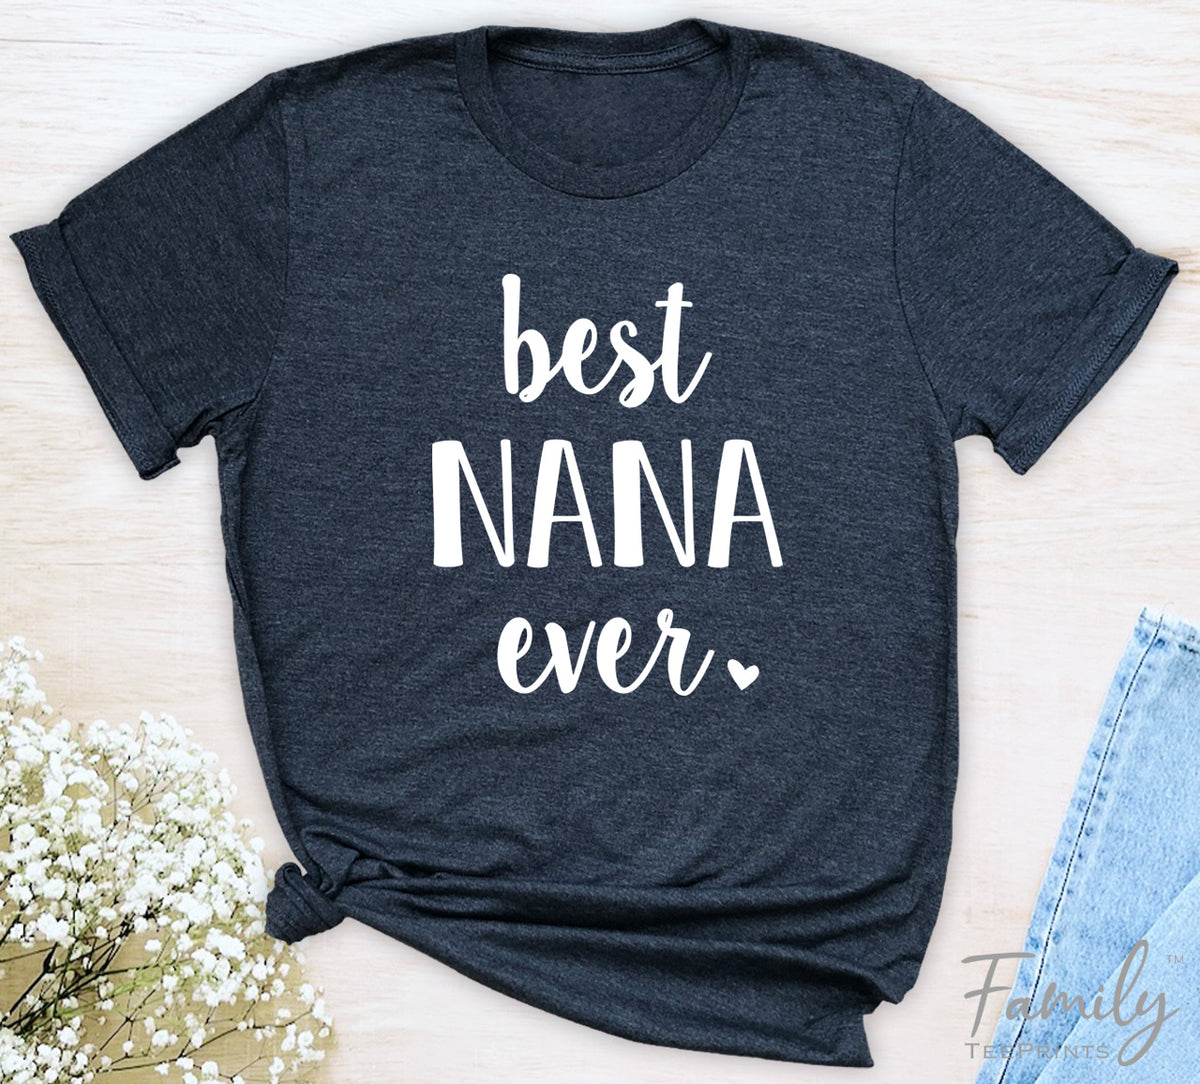 Best Nana Ever - Unisex T-shirt - Nana Shirt - Gift For New Nana